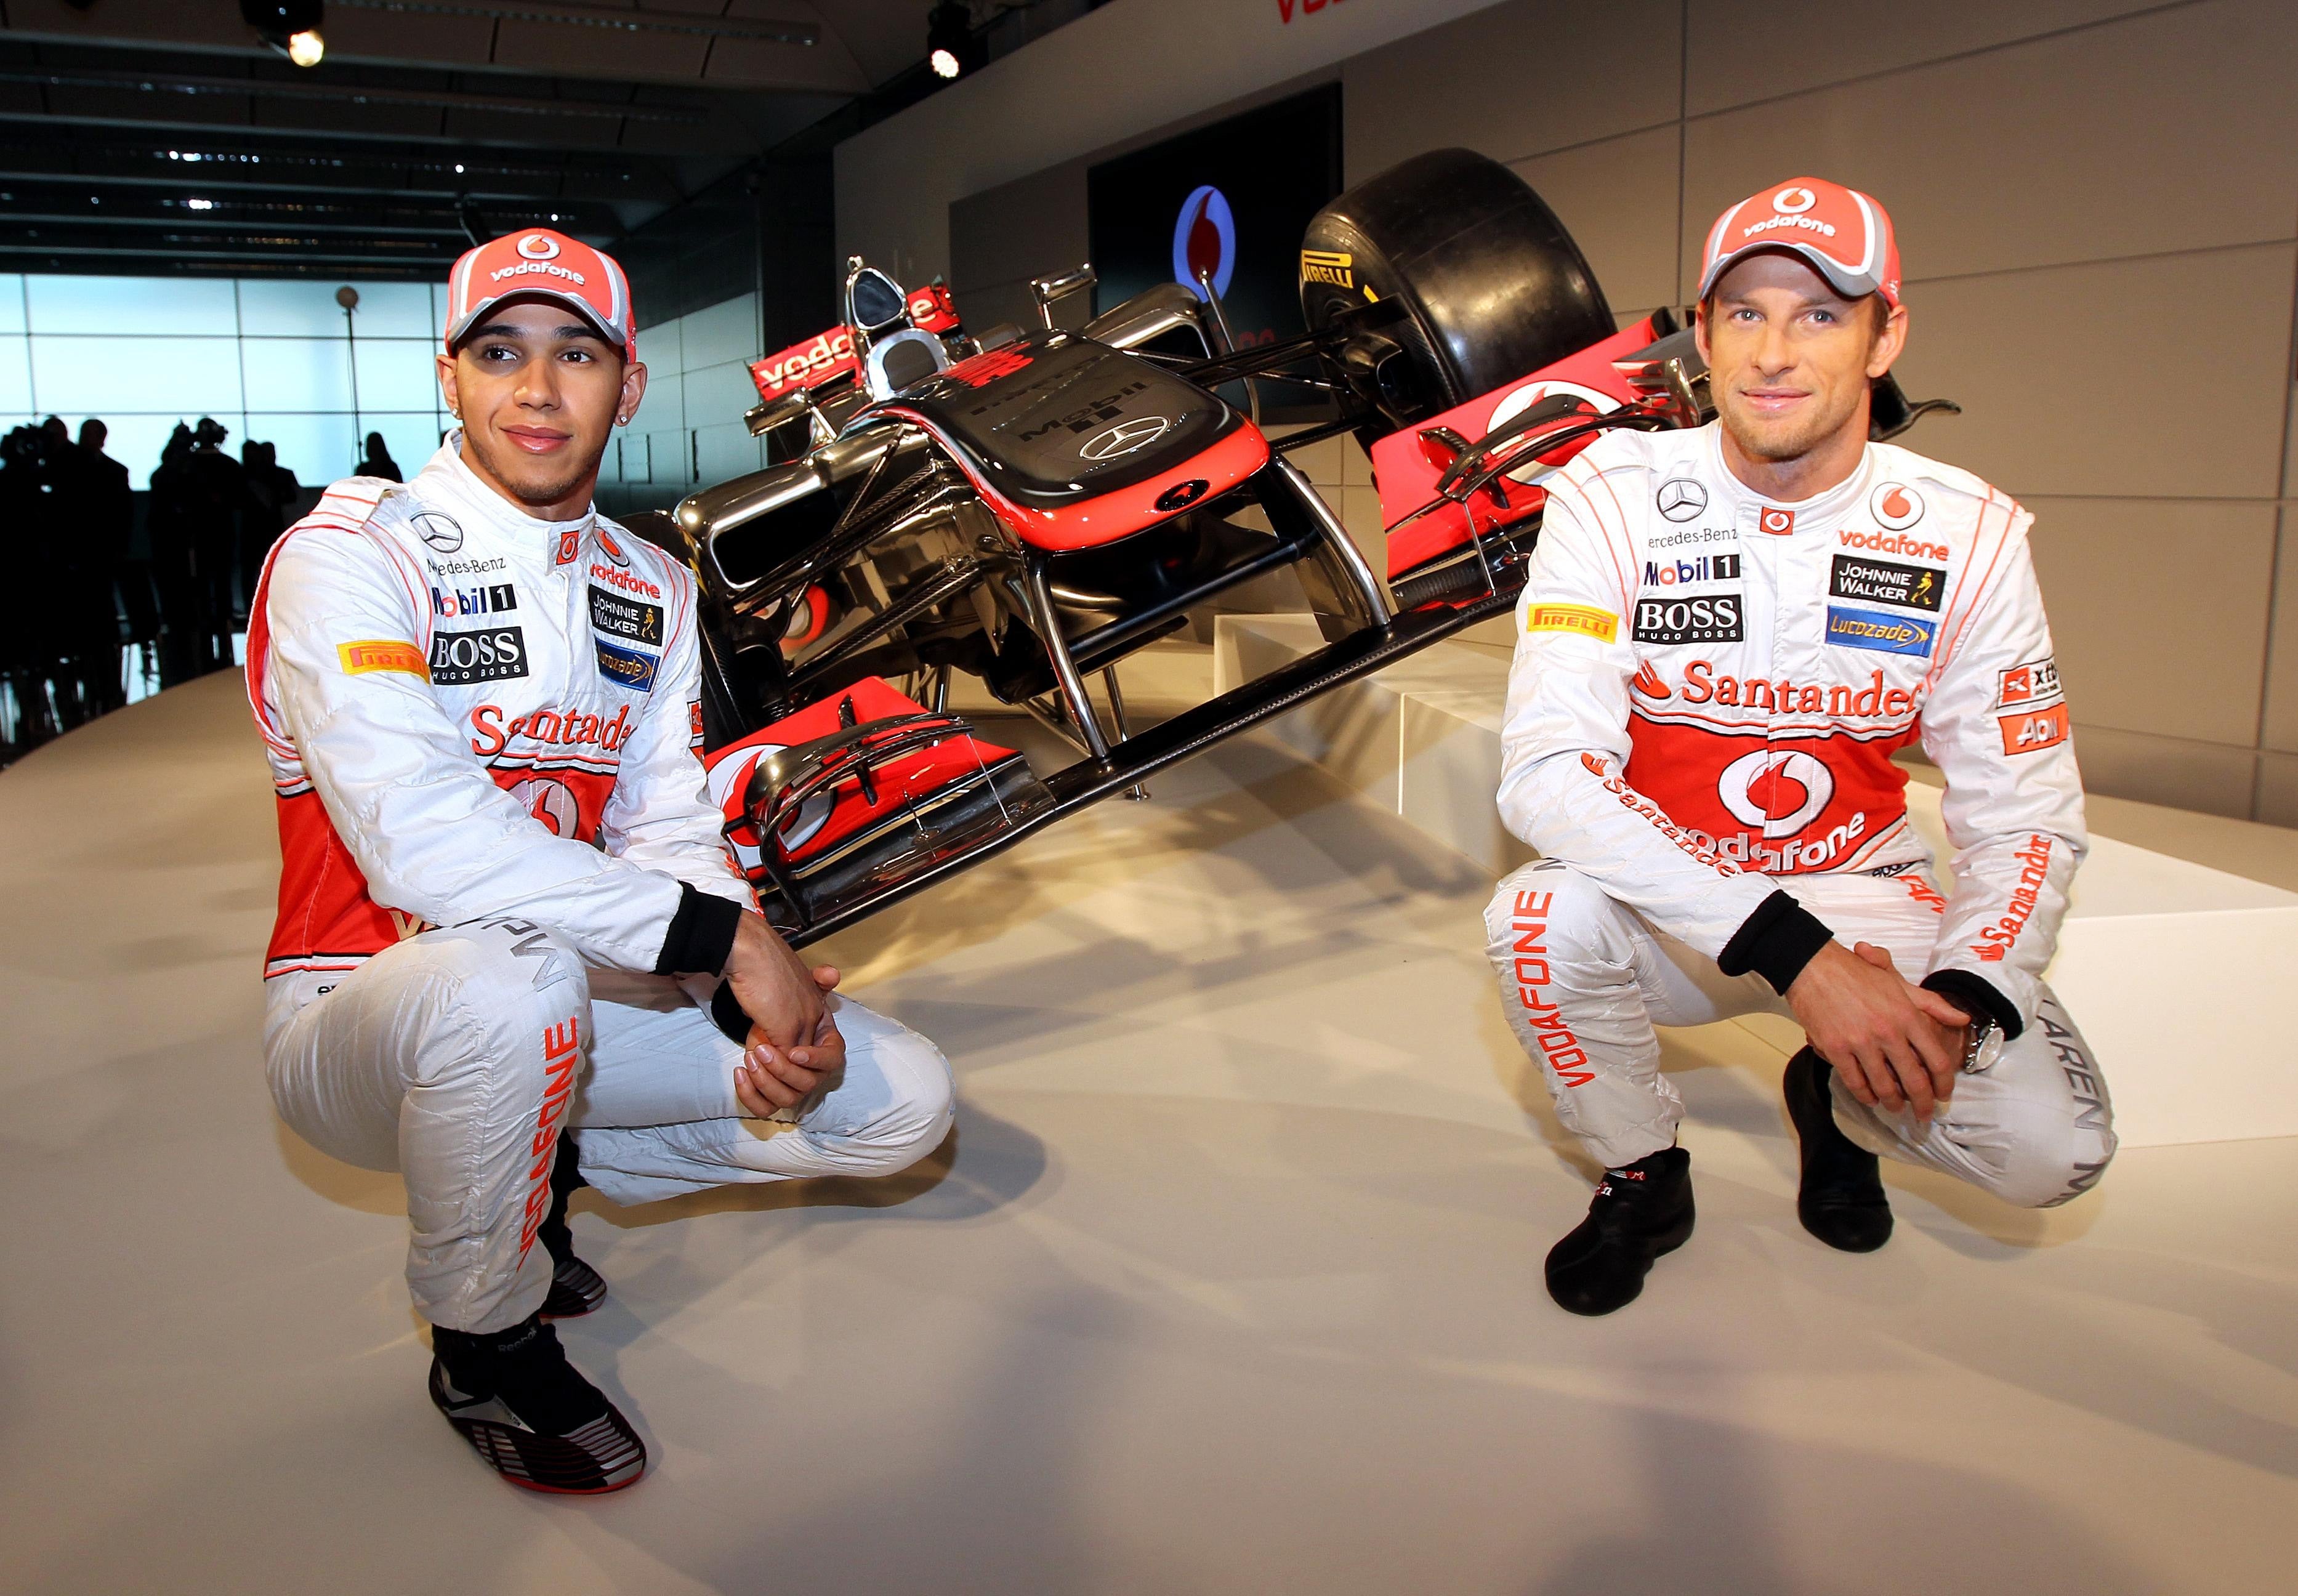 Lewis Hamilton (left) and Jenson Button (right) were team-mates at McLaren